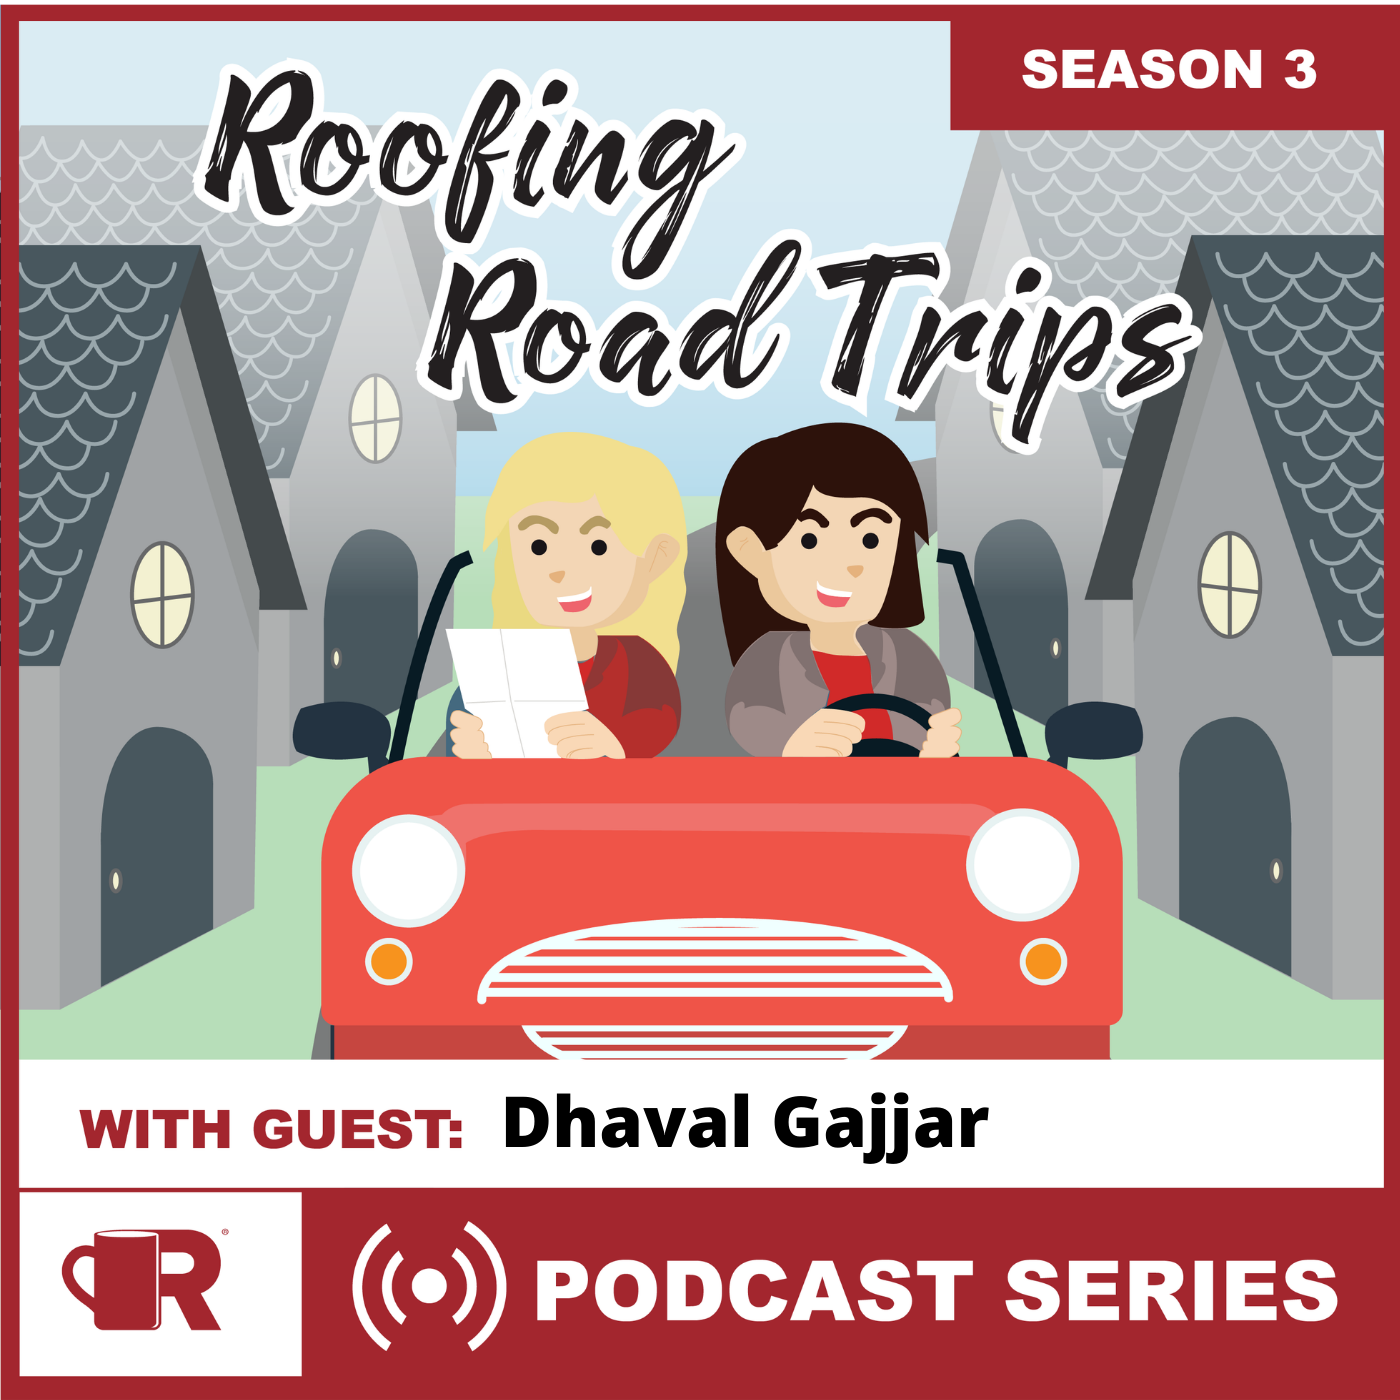 RA - Dhaval Gajjar Podcast